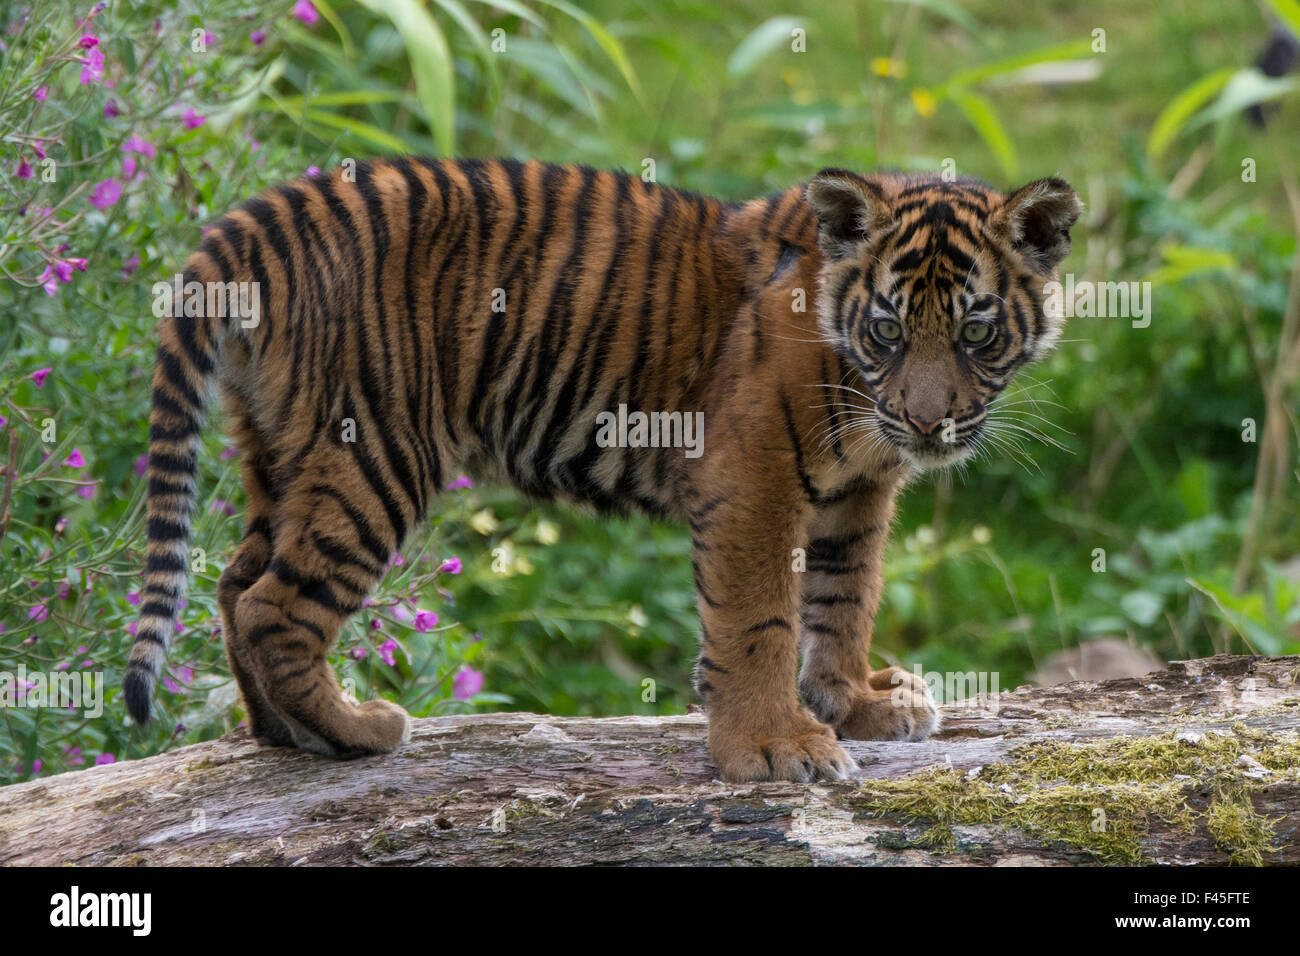 Jeune tigre de Sumatra (Panthera tigris sumatrae), âgée de quatre mois, captive, se produit à Sumatra, Indonésie Banque D'Images